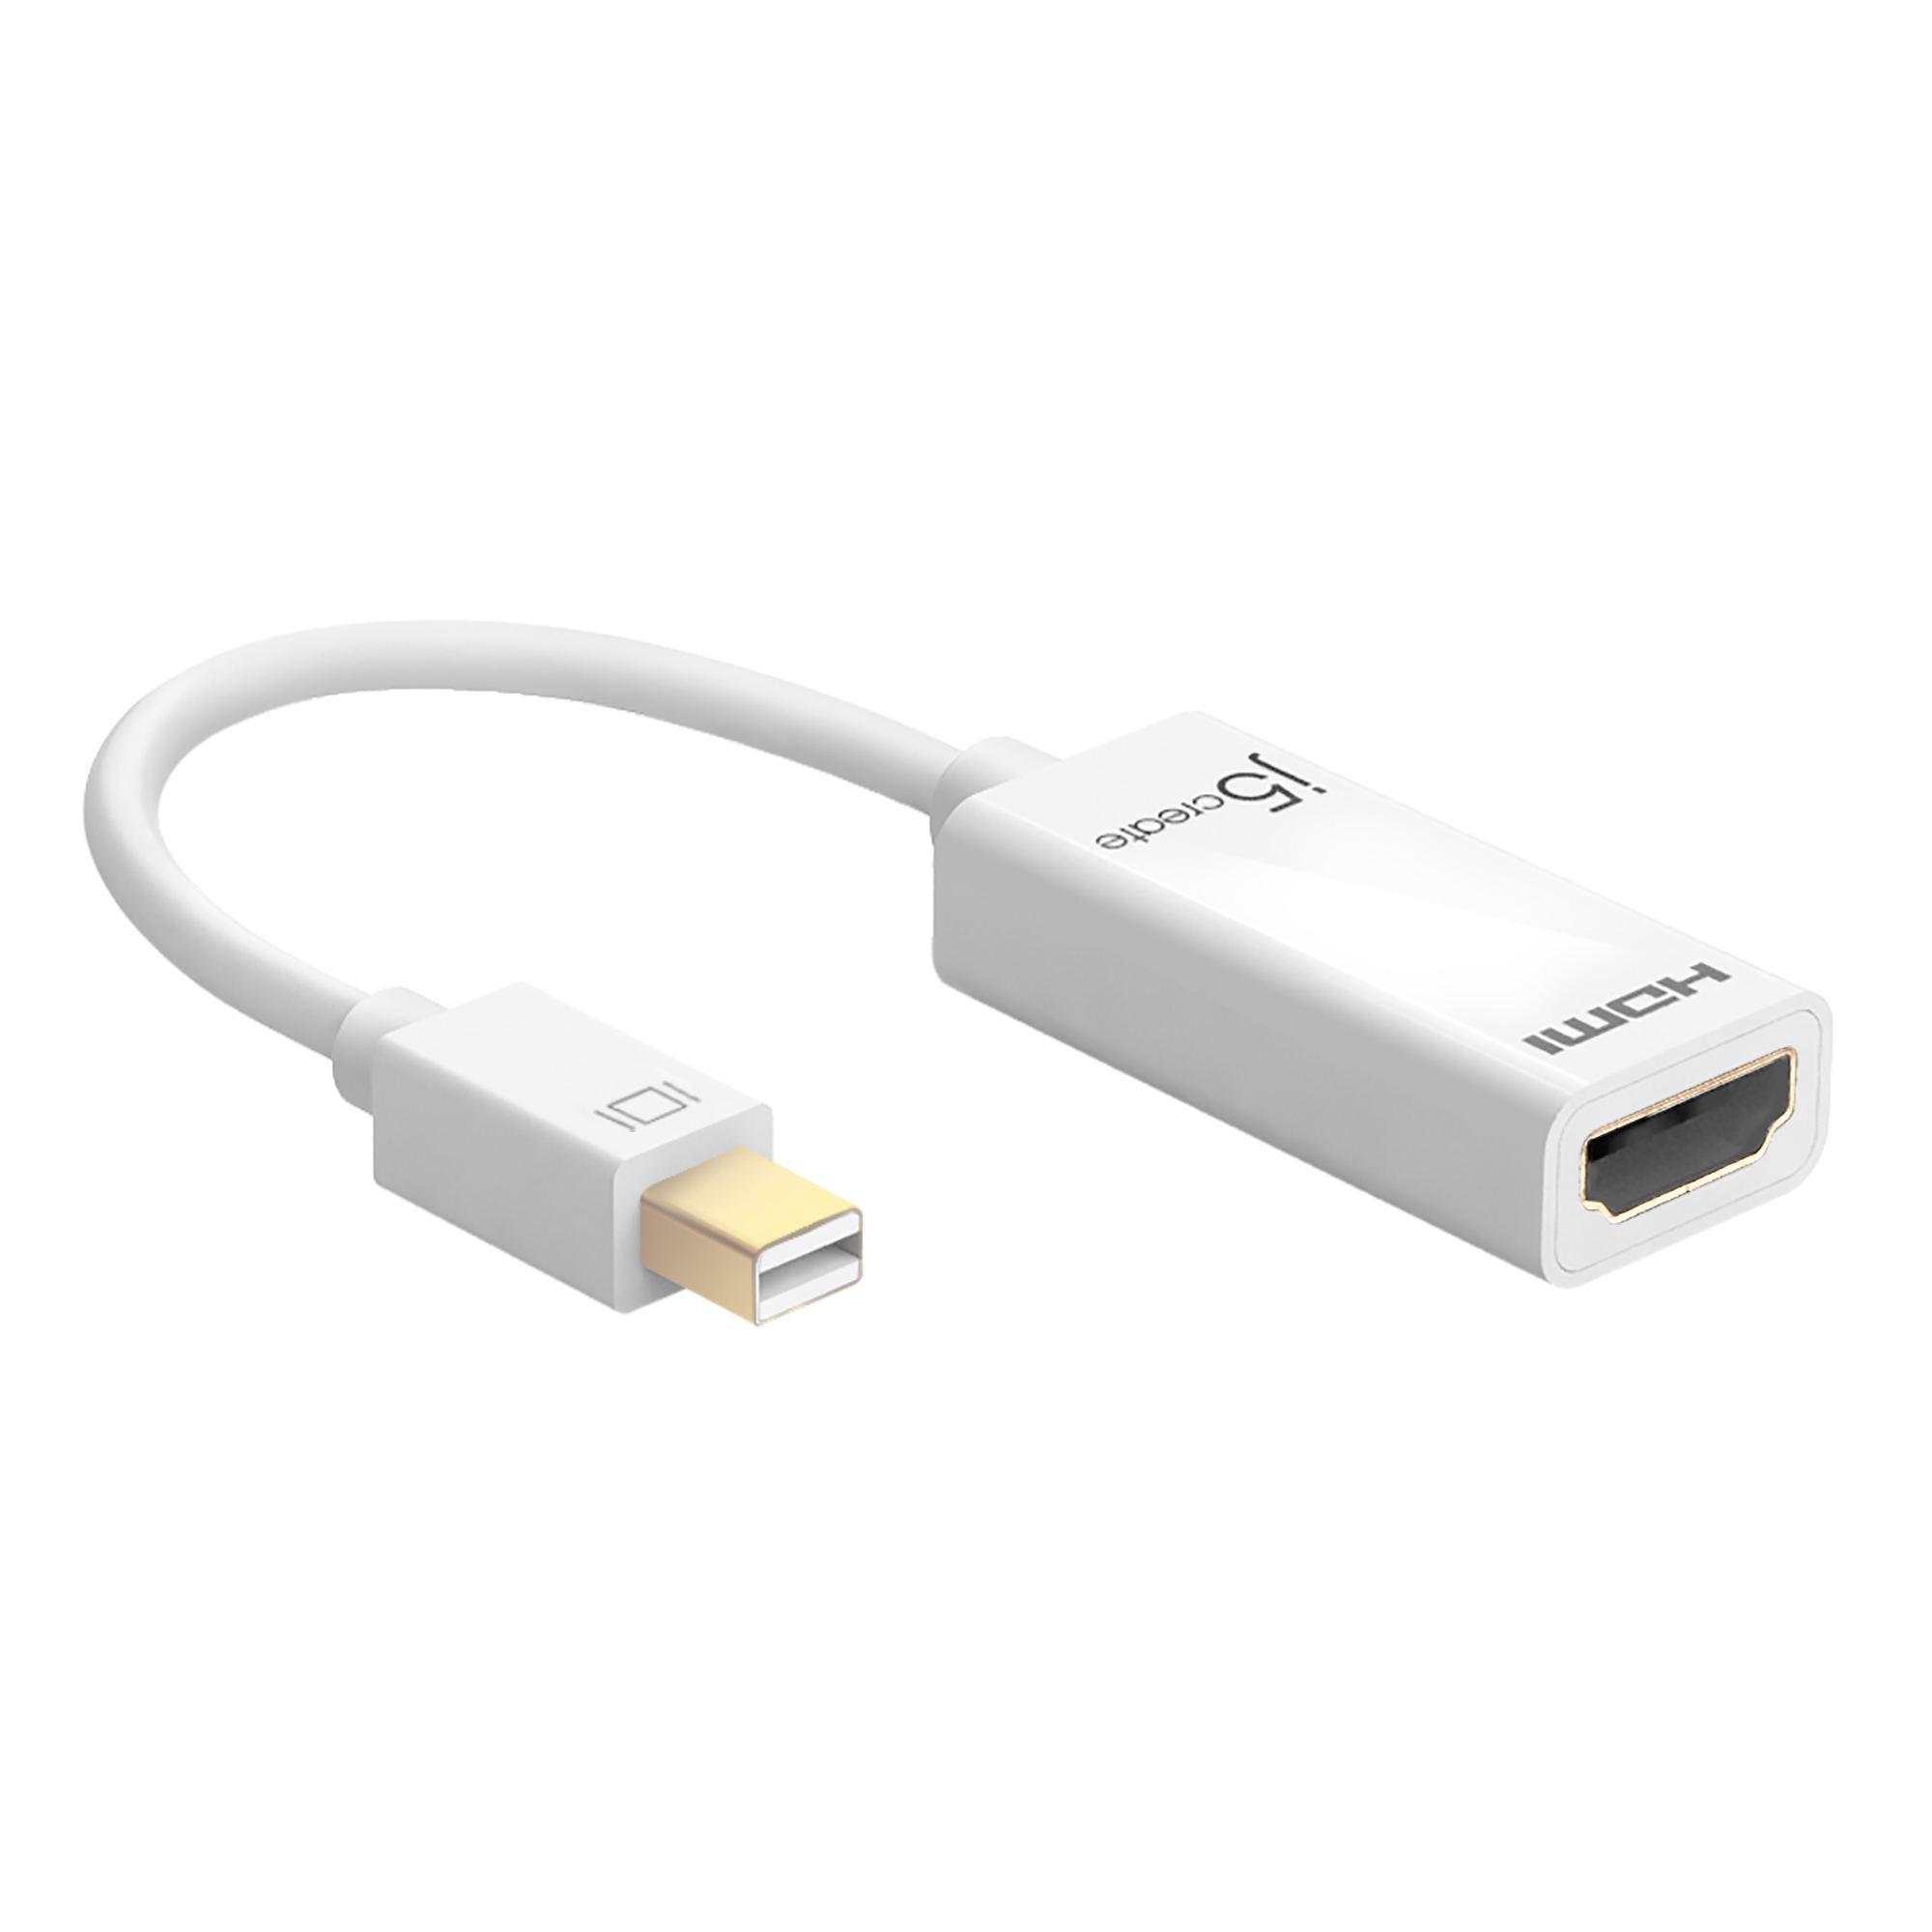 Photos - Cable (video, audio, USB) j5create JDA159 mini DisplayPort™ to 4K HDMI™ Adapter, White JDA159-N 